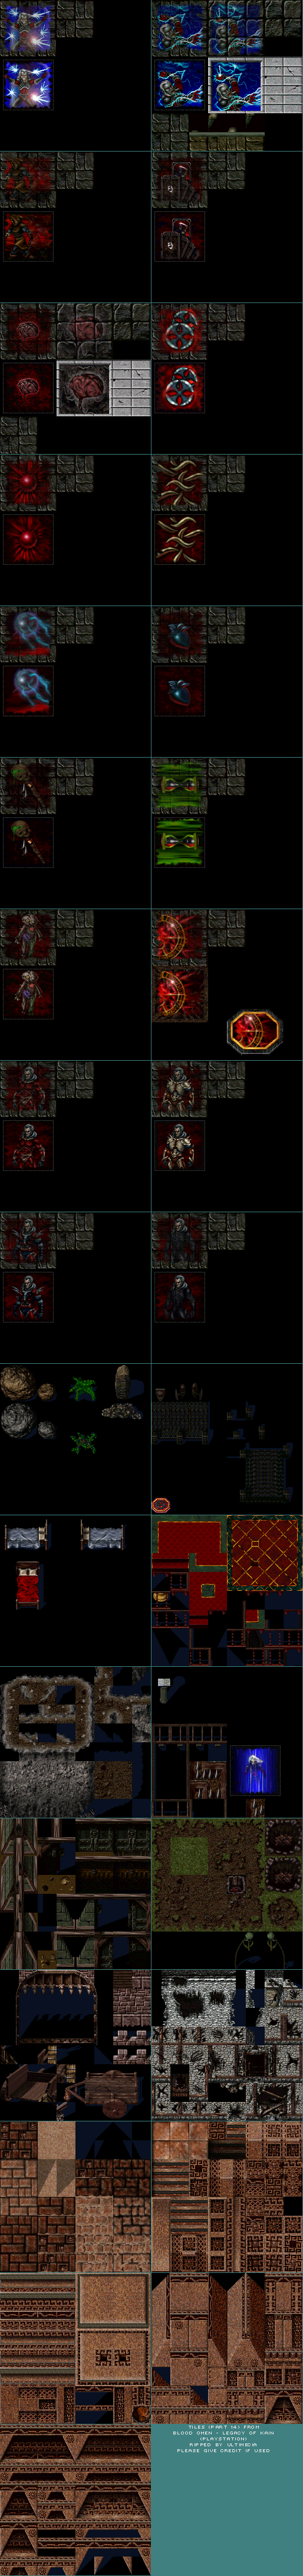 Legacy of Kain: Blood Omen - Tiles 14